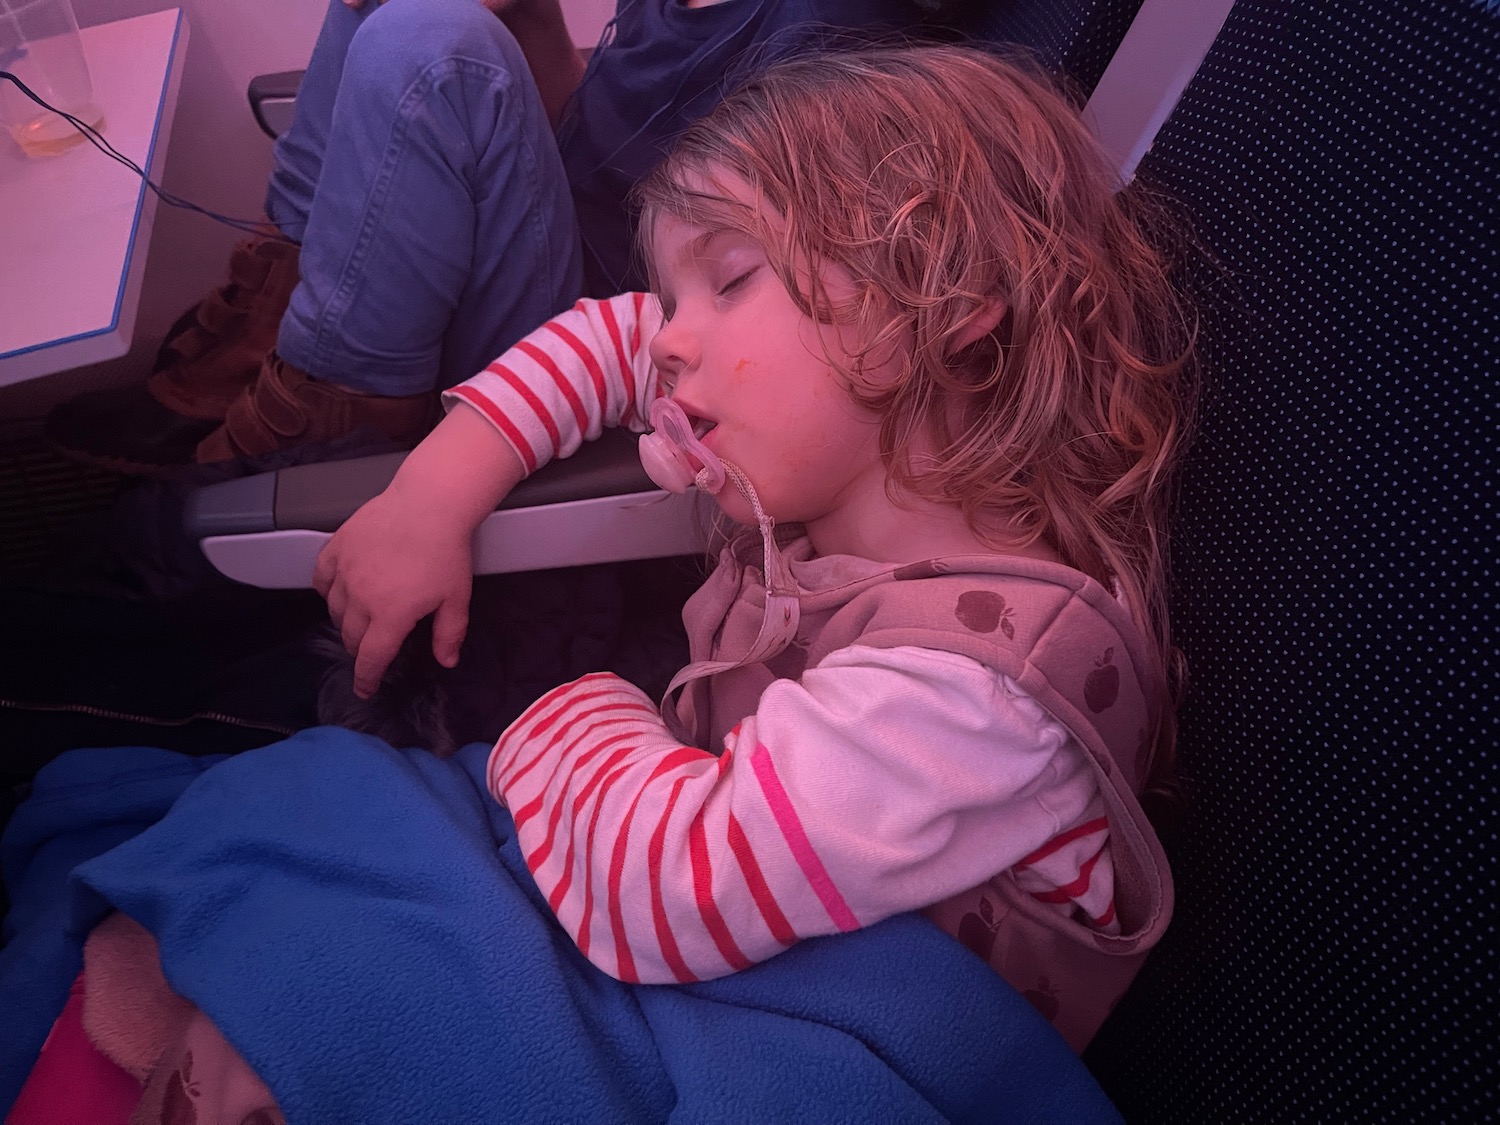 a child sleeping on a plane